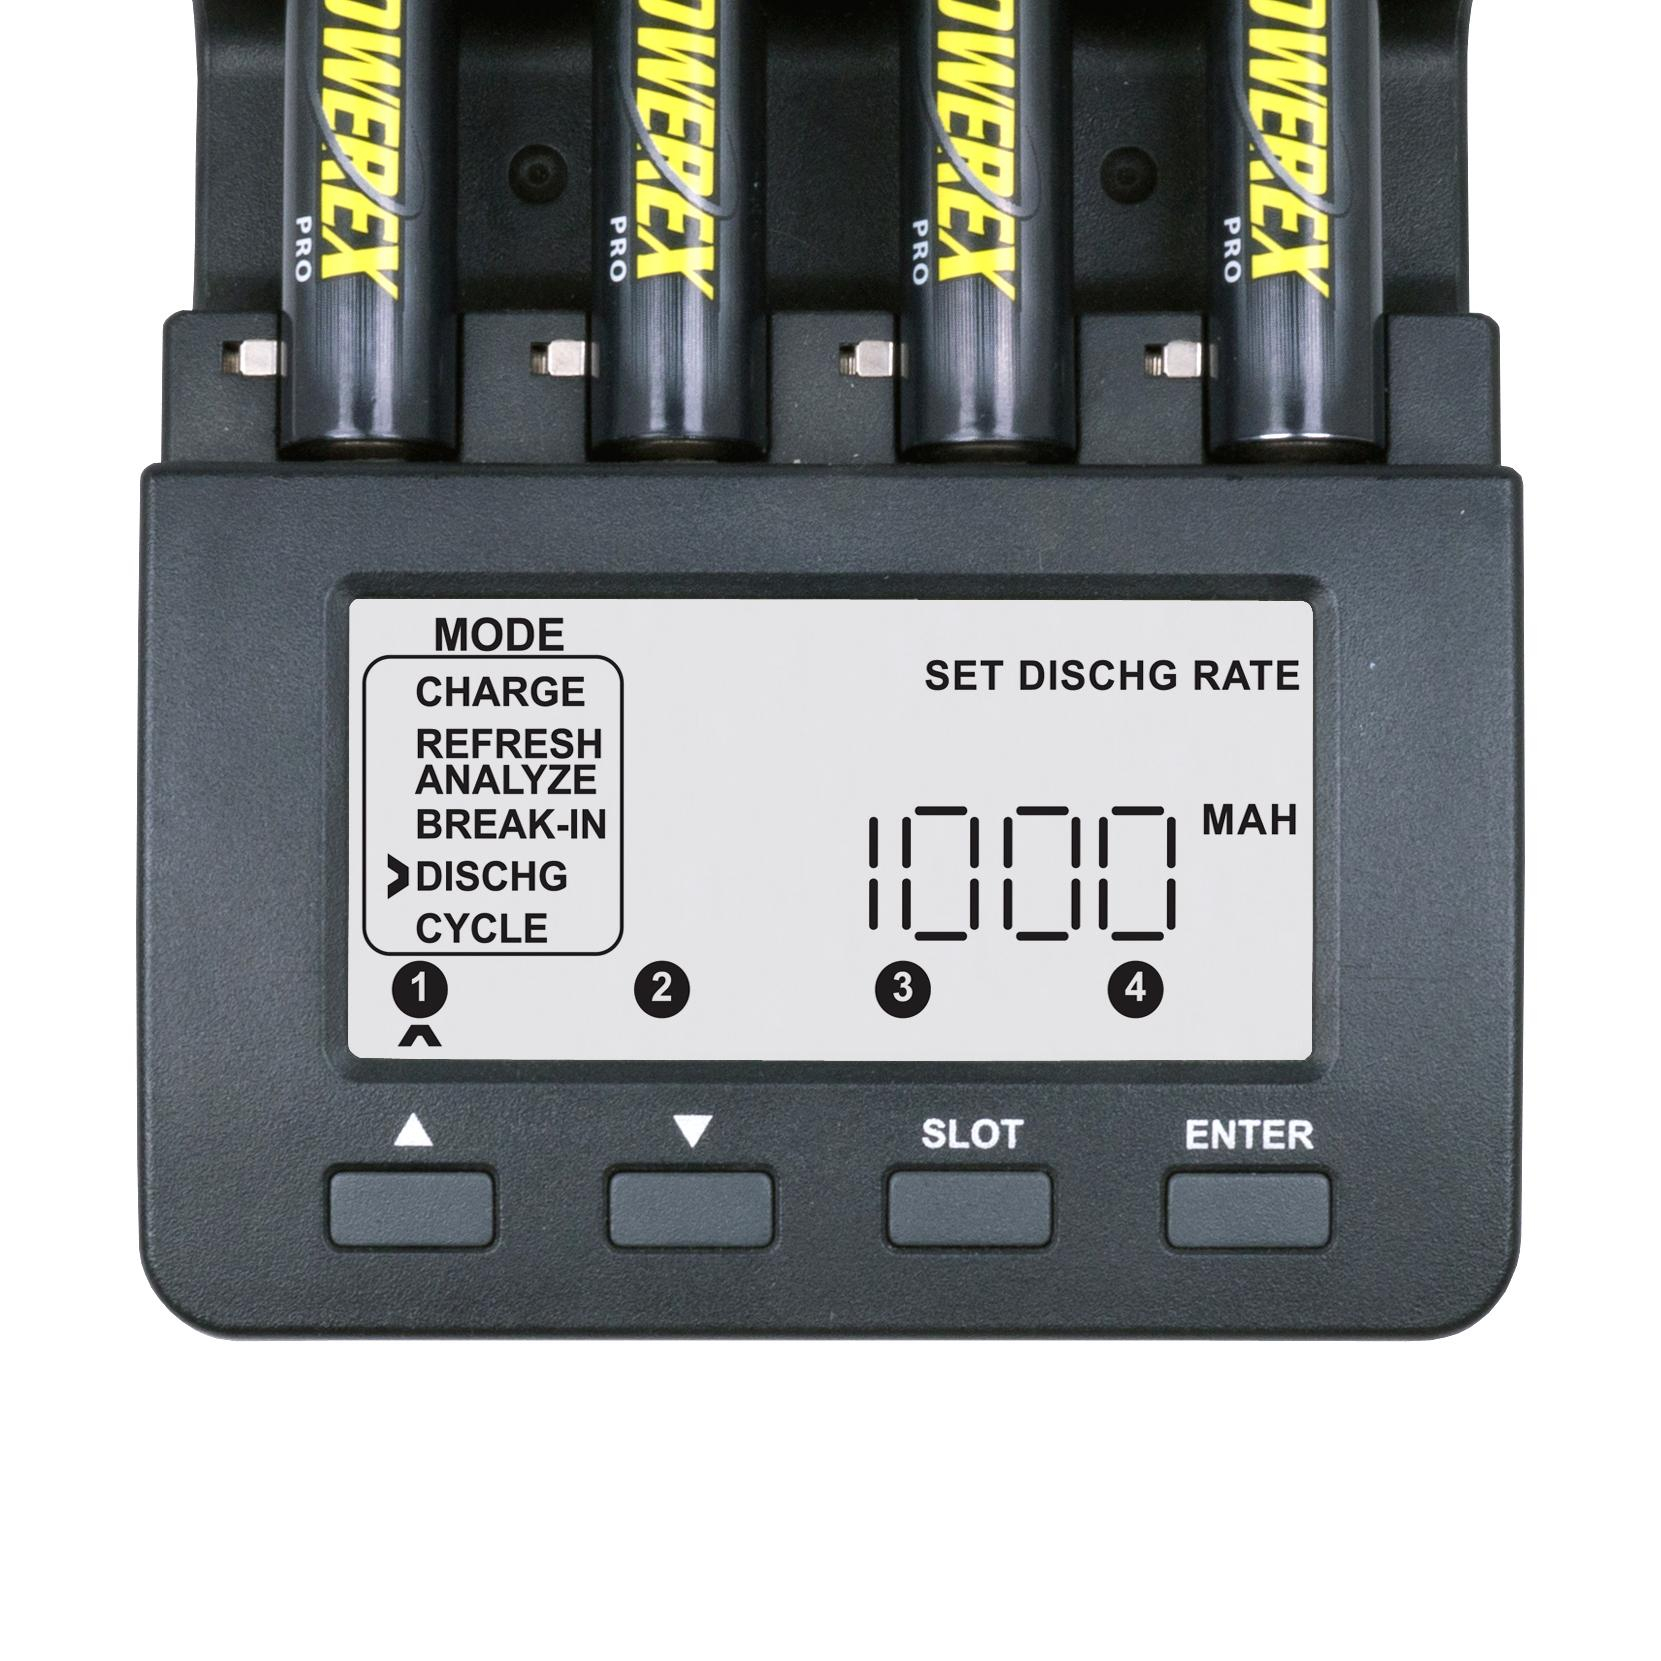 Зарядные устройства и аккумуляторные батарейки тип AA и AAA, батарейки